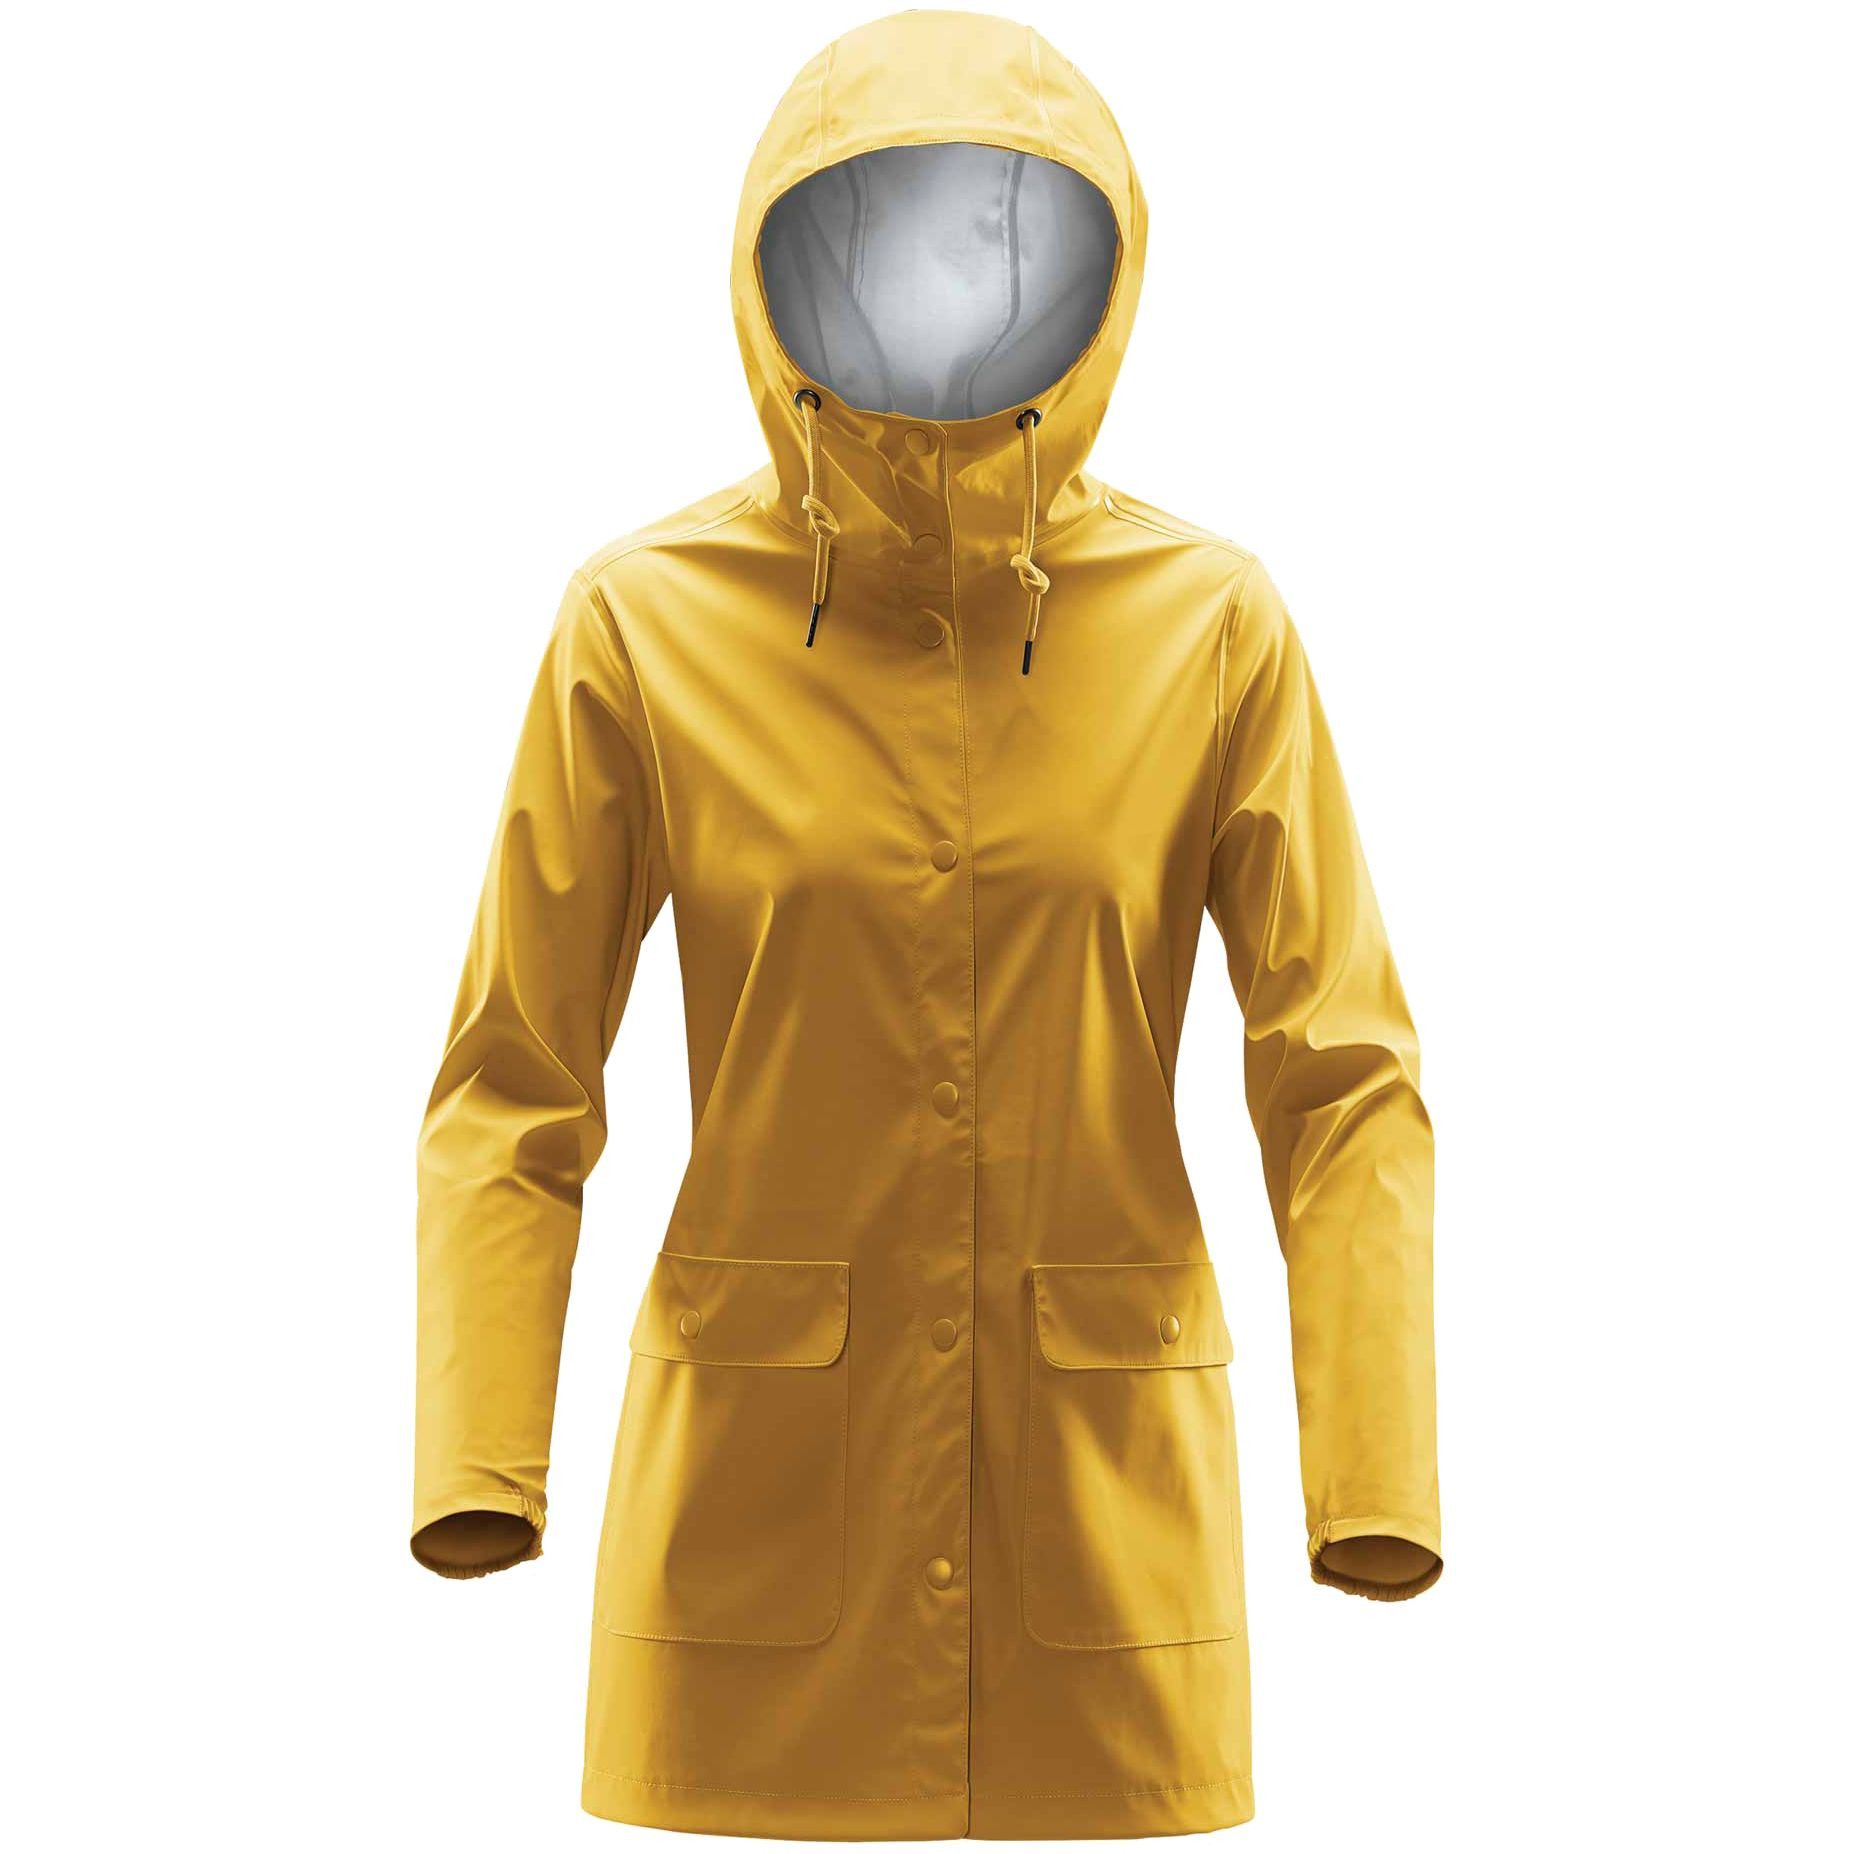 Плащ от дождя купить. Дождевик Kappa женский. Yellow Raincoat плащ. Дождевик icon 1000 Rain Jacket. Sasta дождевик.